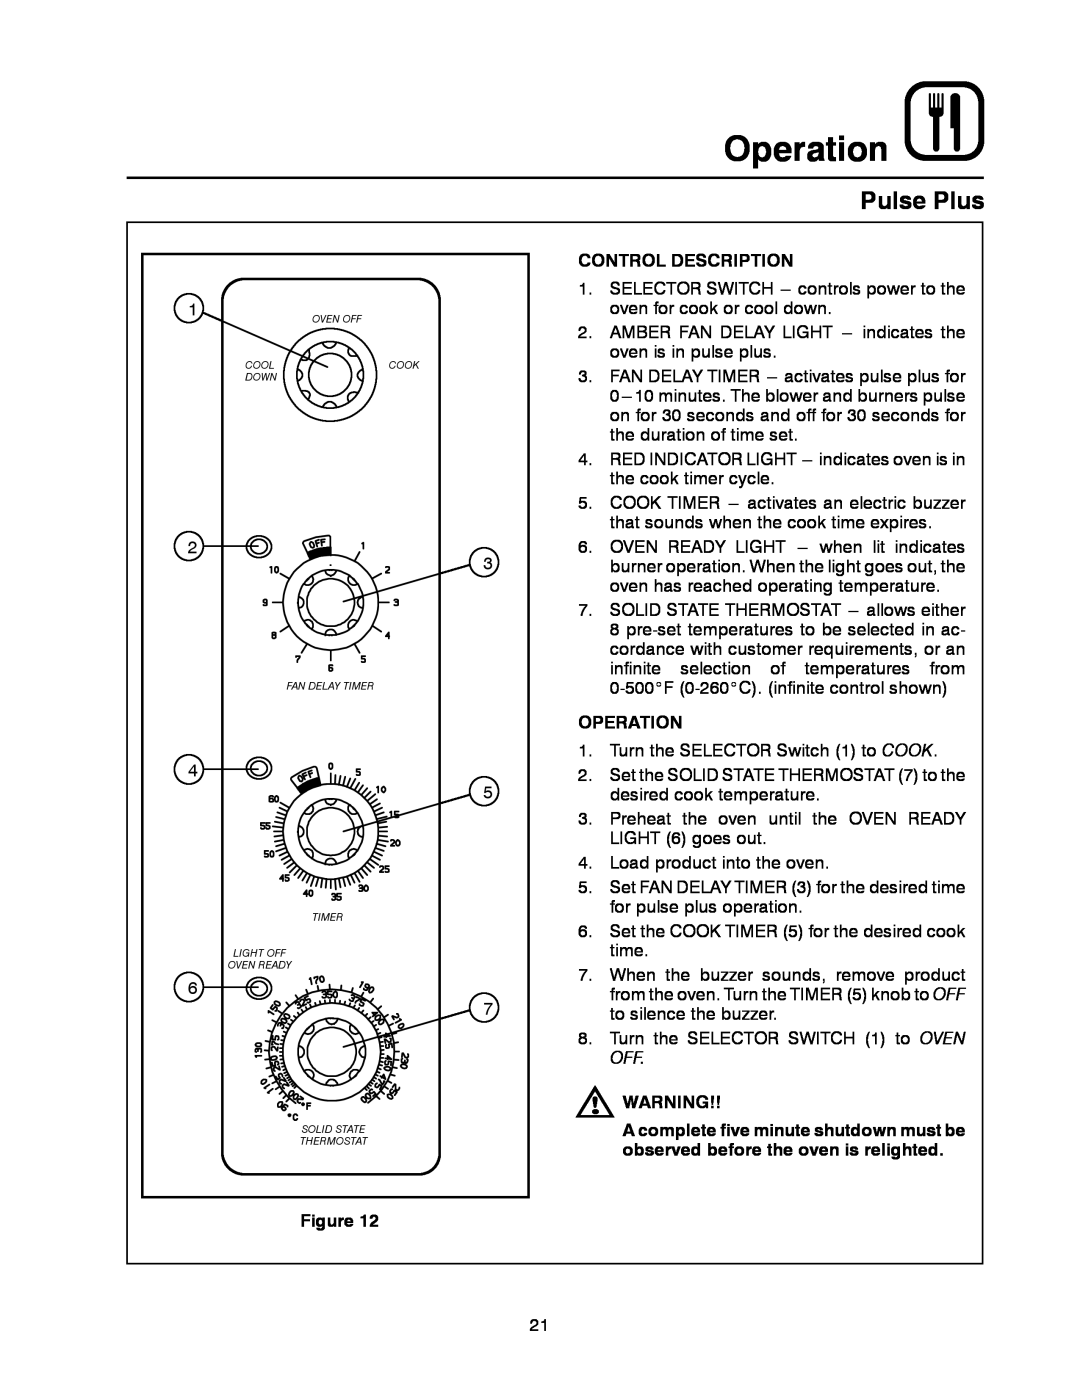 Blodgett DFG-50 manual Pulse Plus, Operation, Control Description 